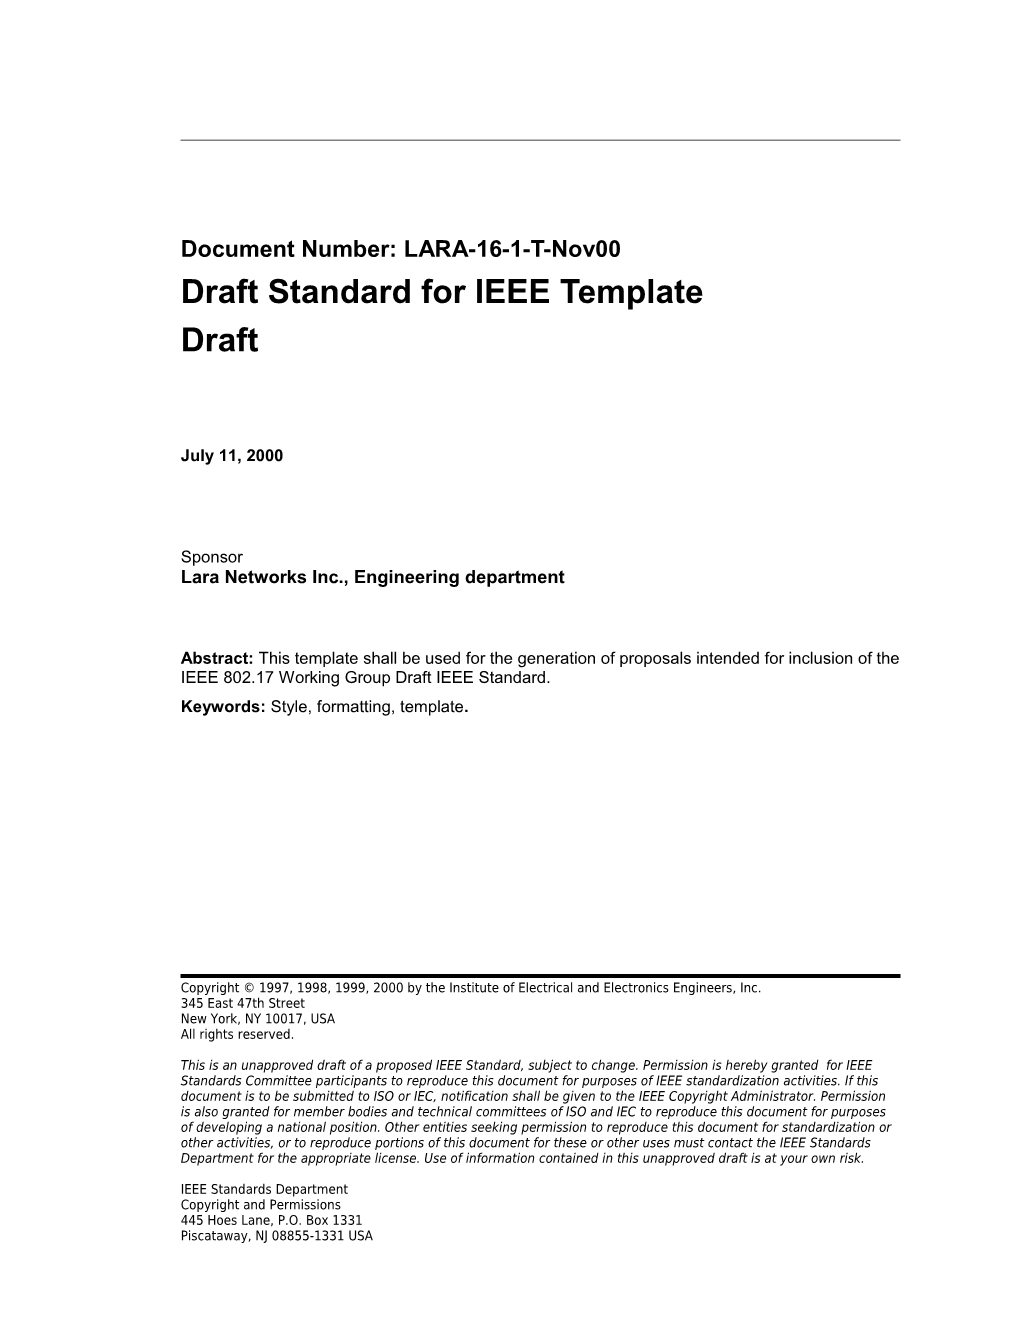 Draft Standard For IEEE Template